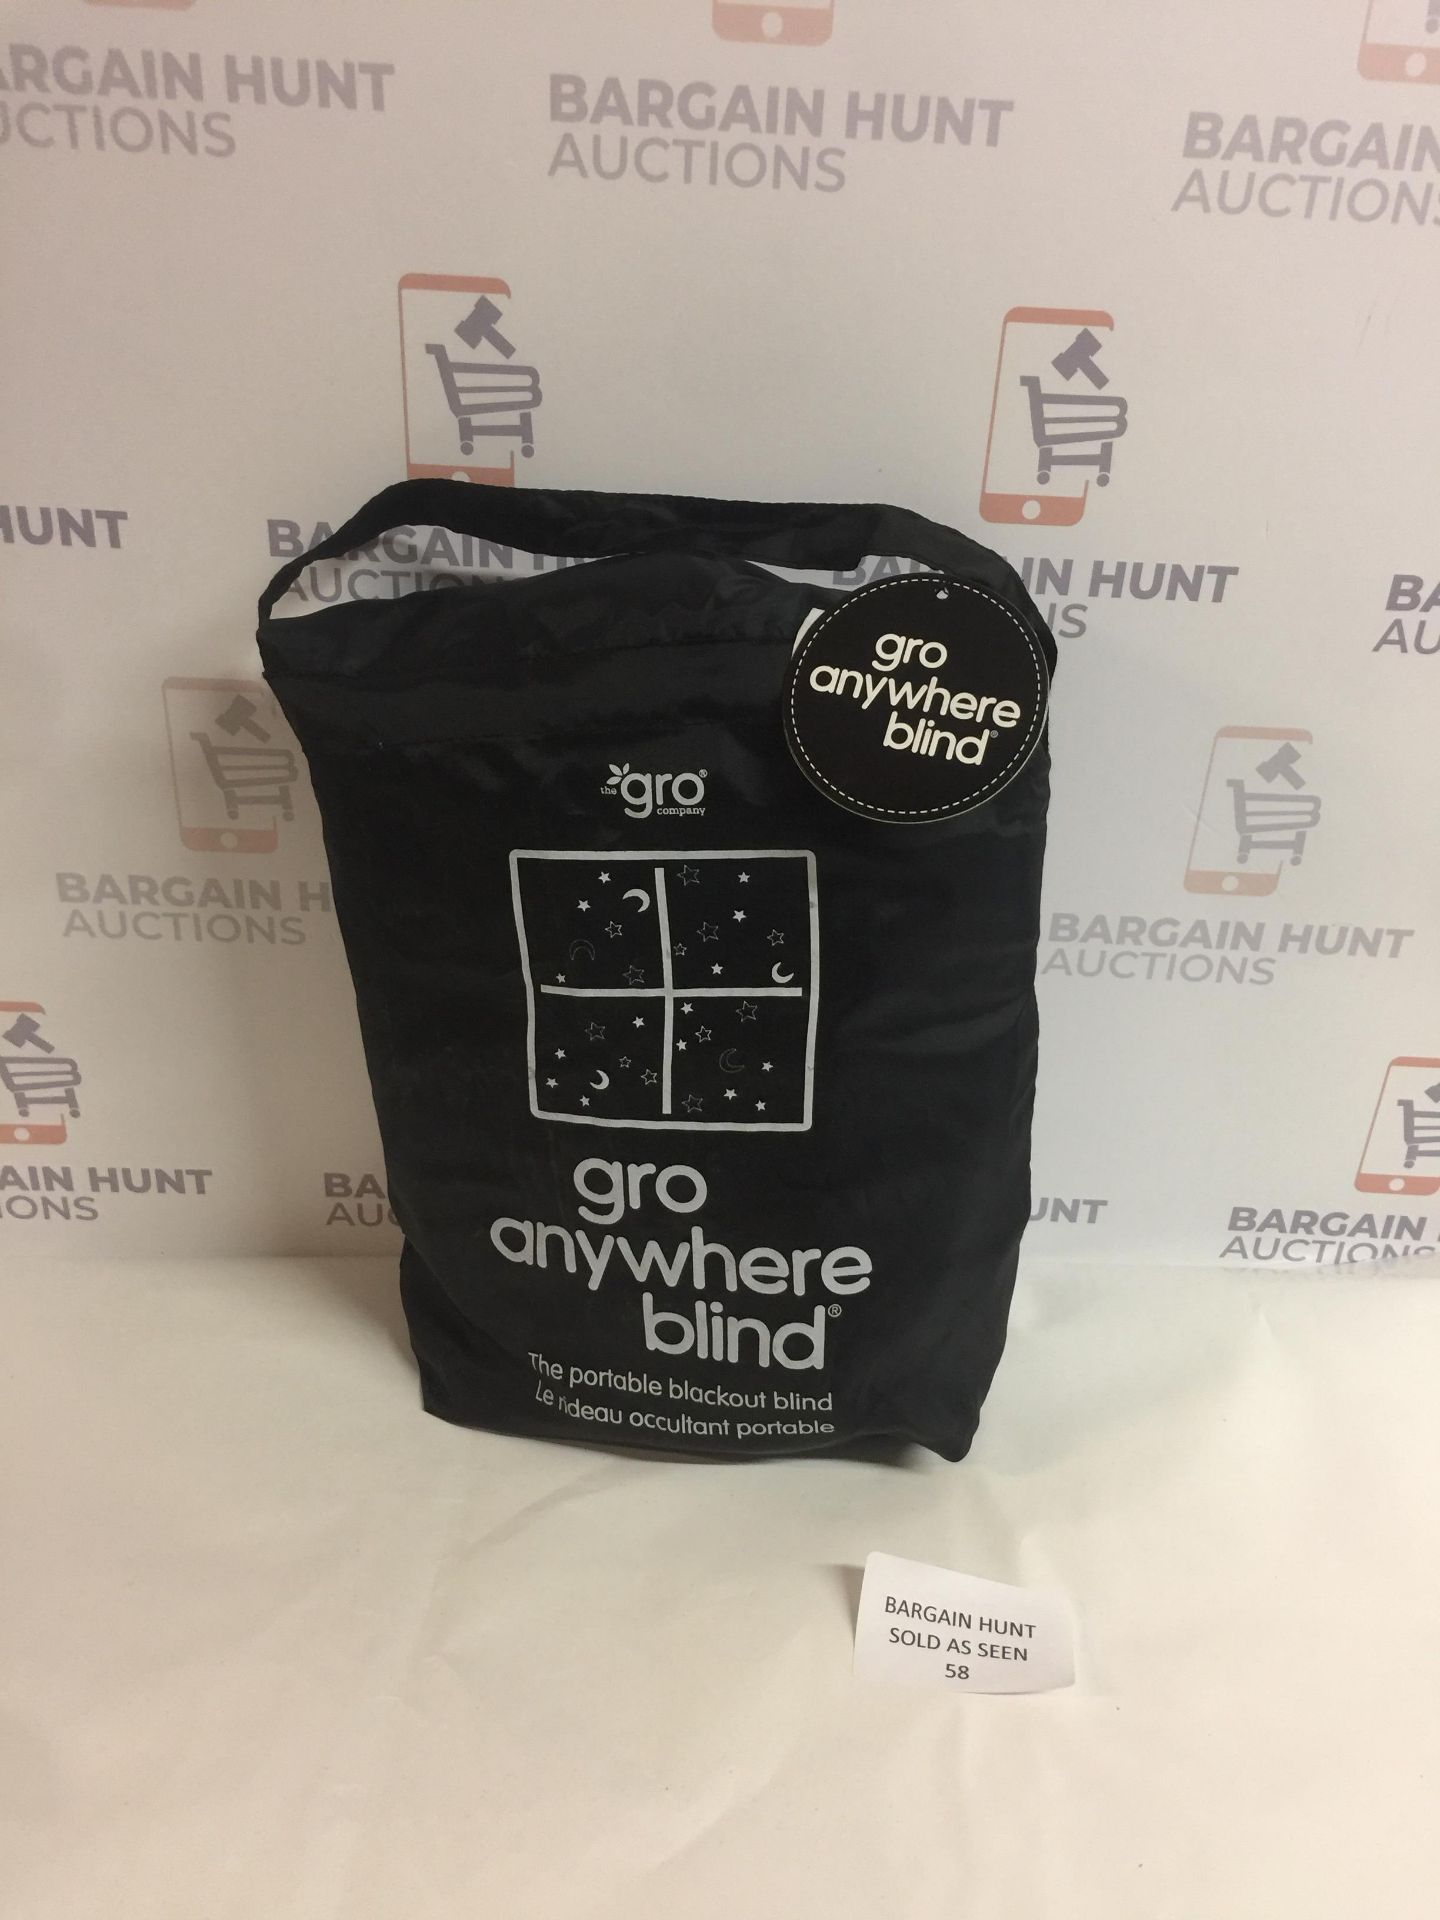 The Gro Company Gro Anywhere Blind